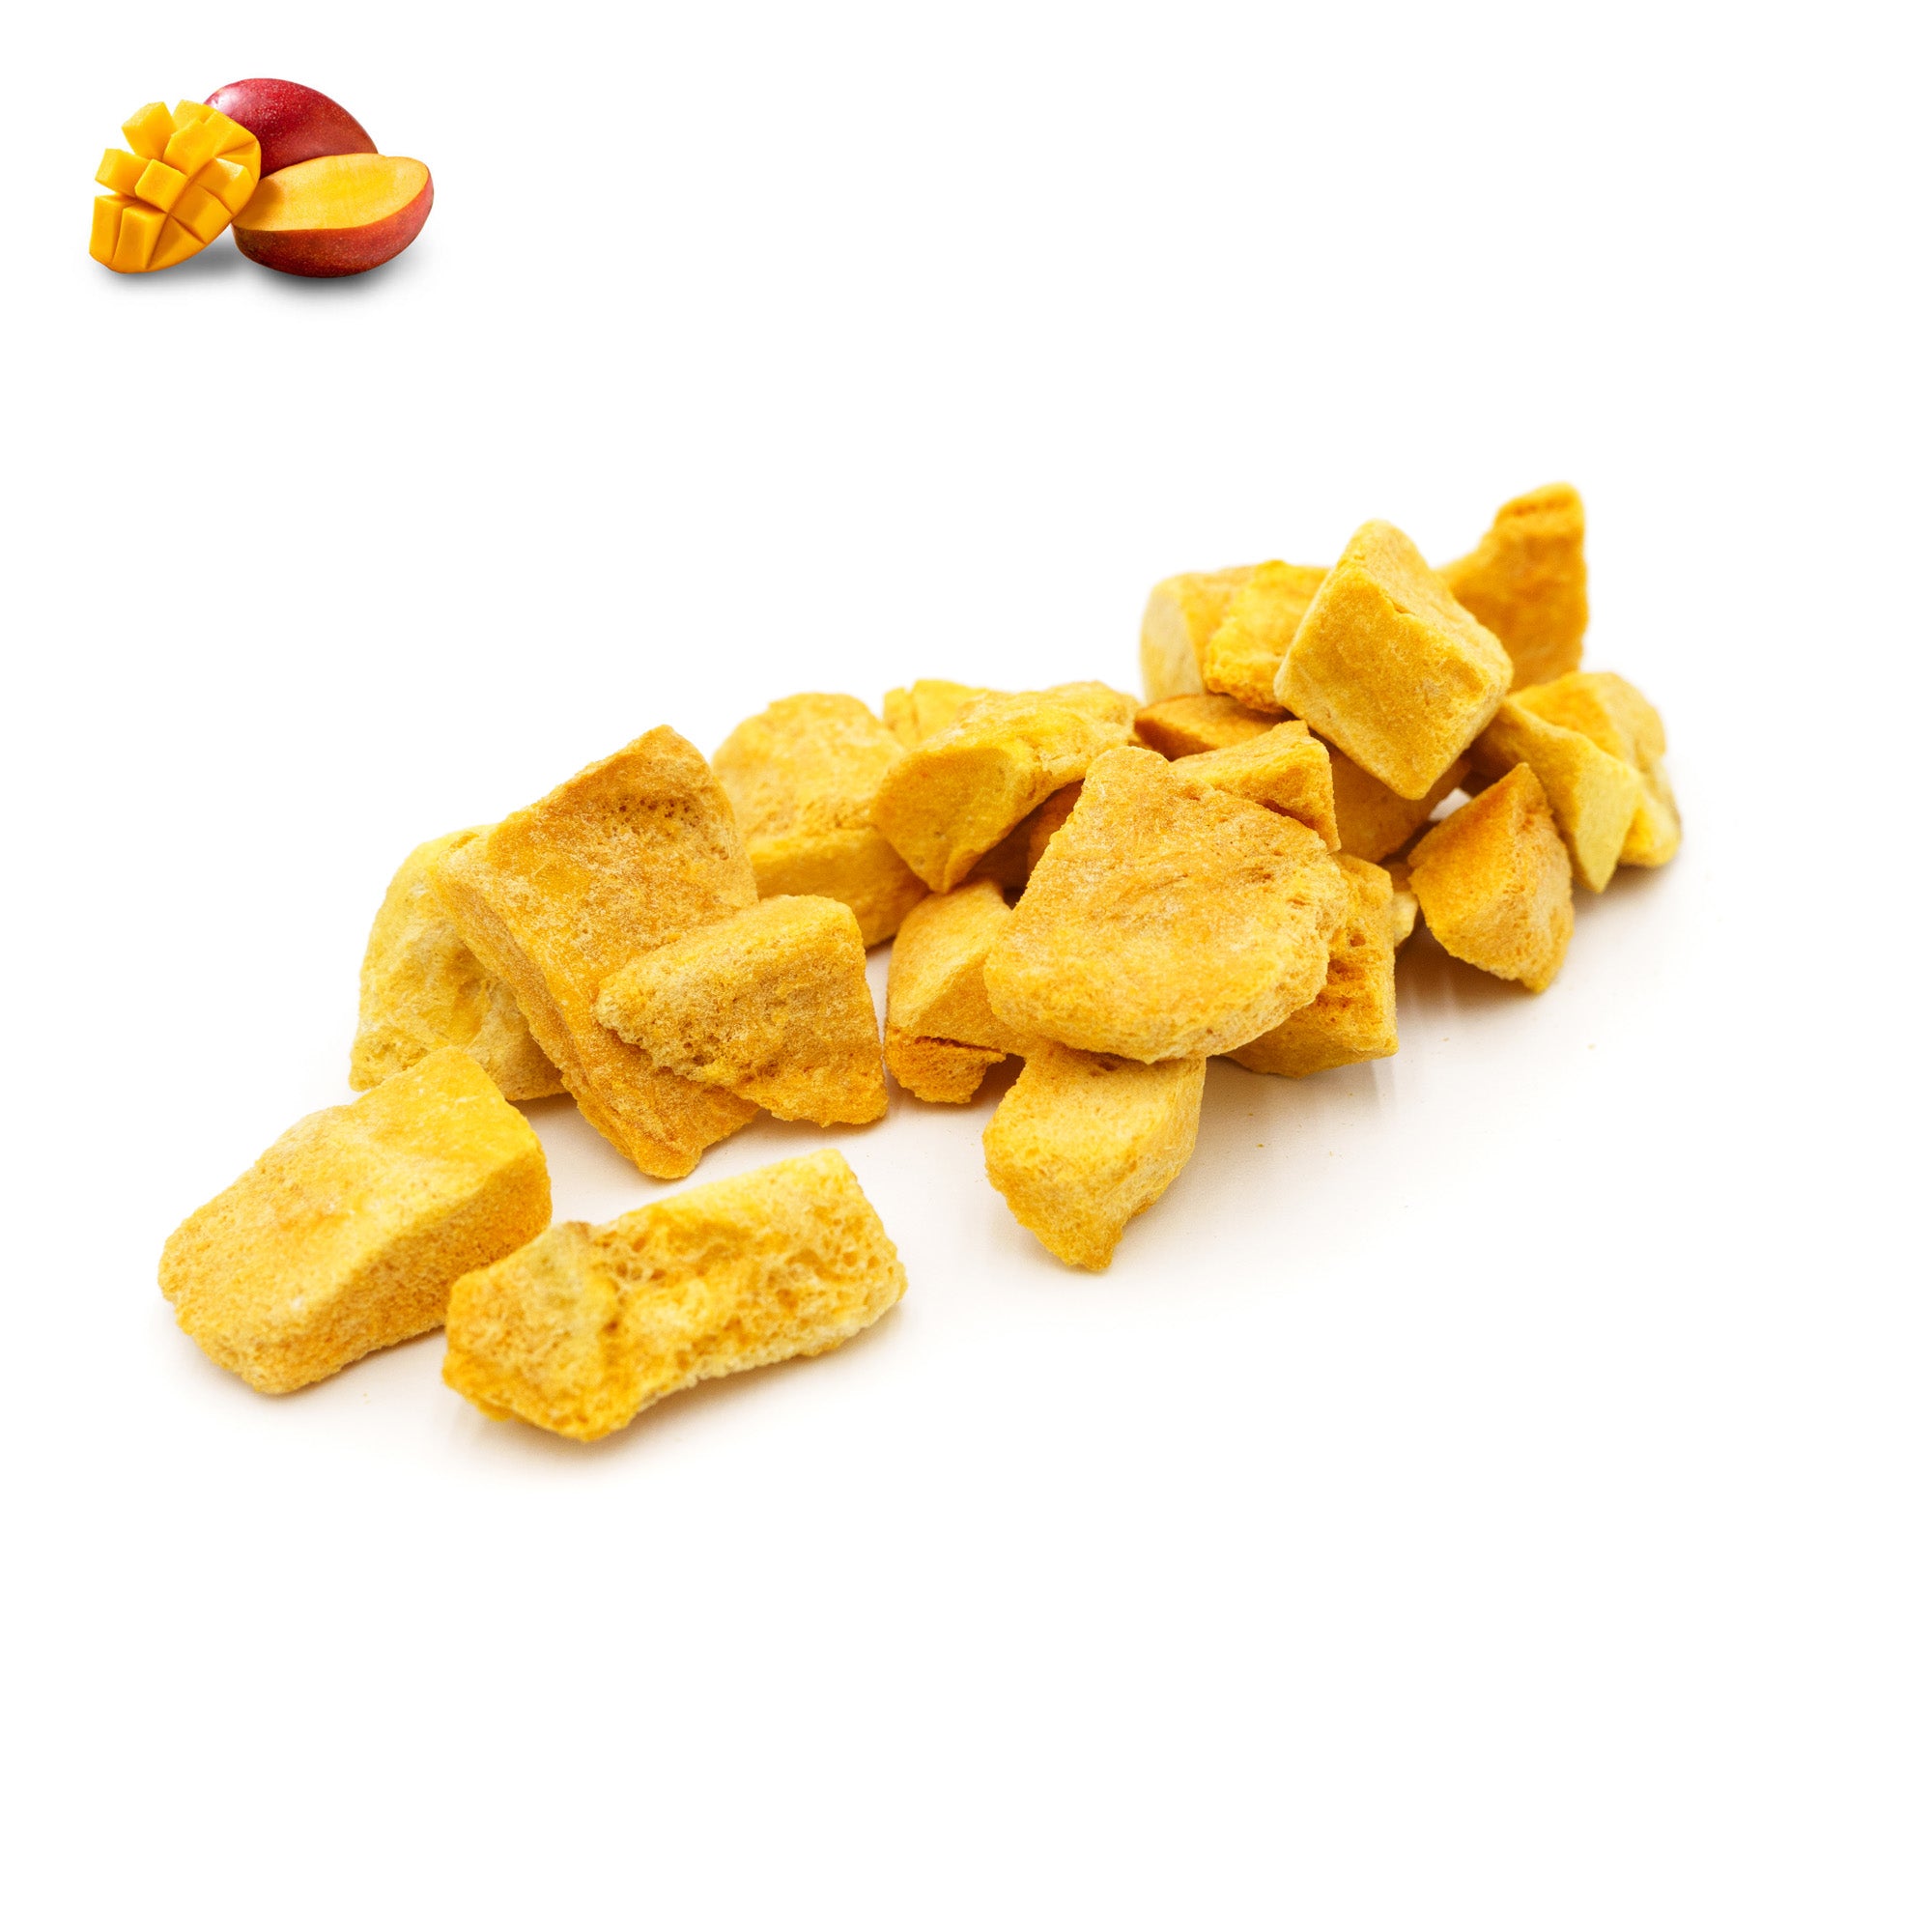 Freeze Dried Mango Chunks - Healthy Snack on the Go